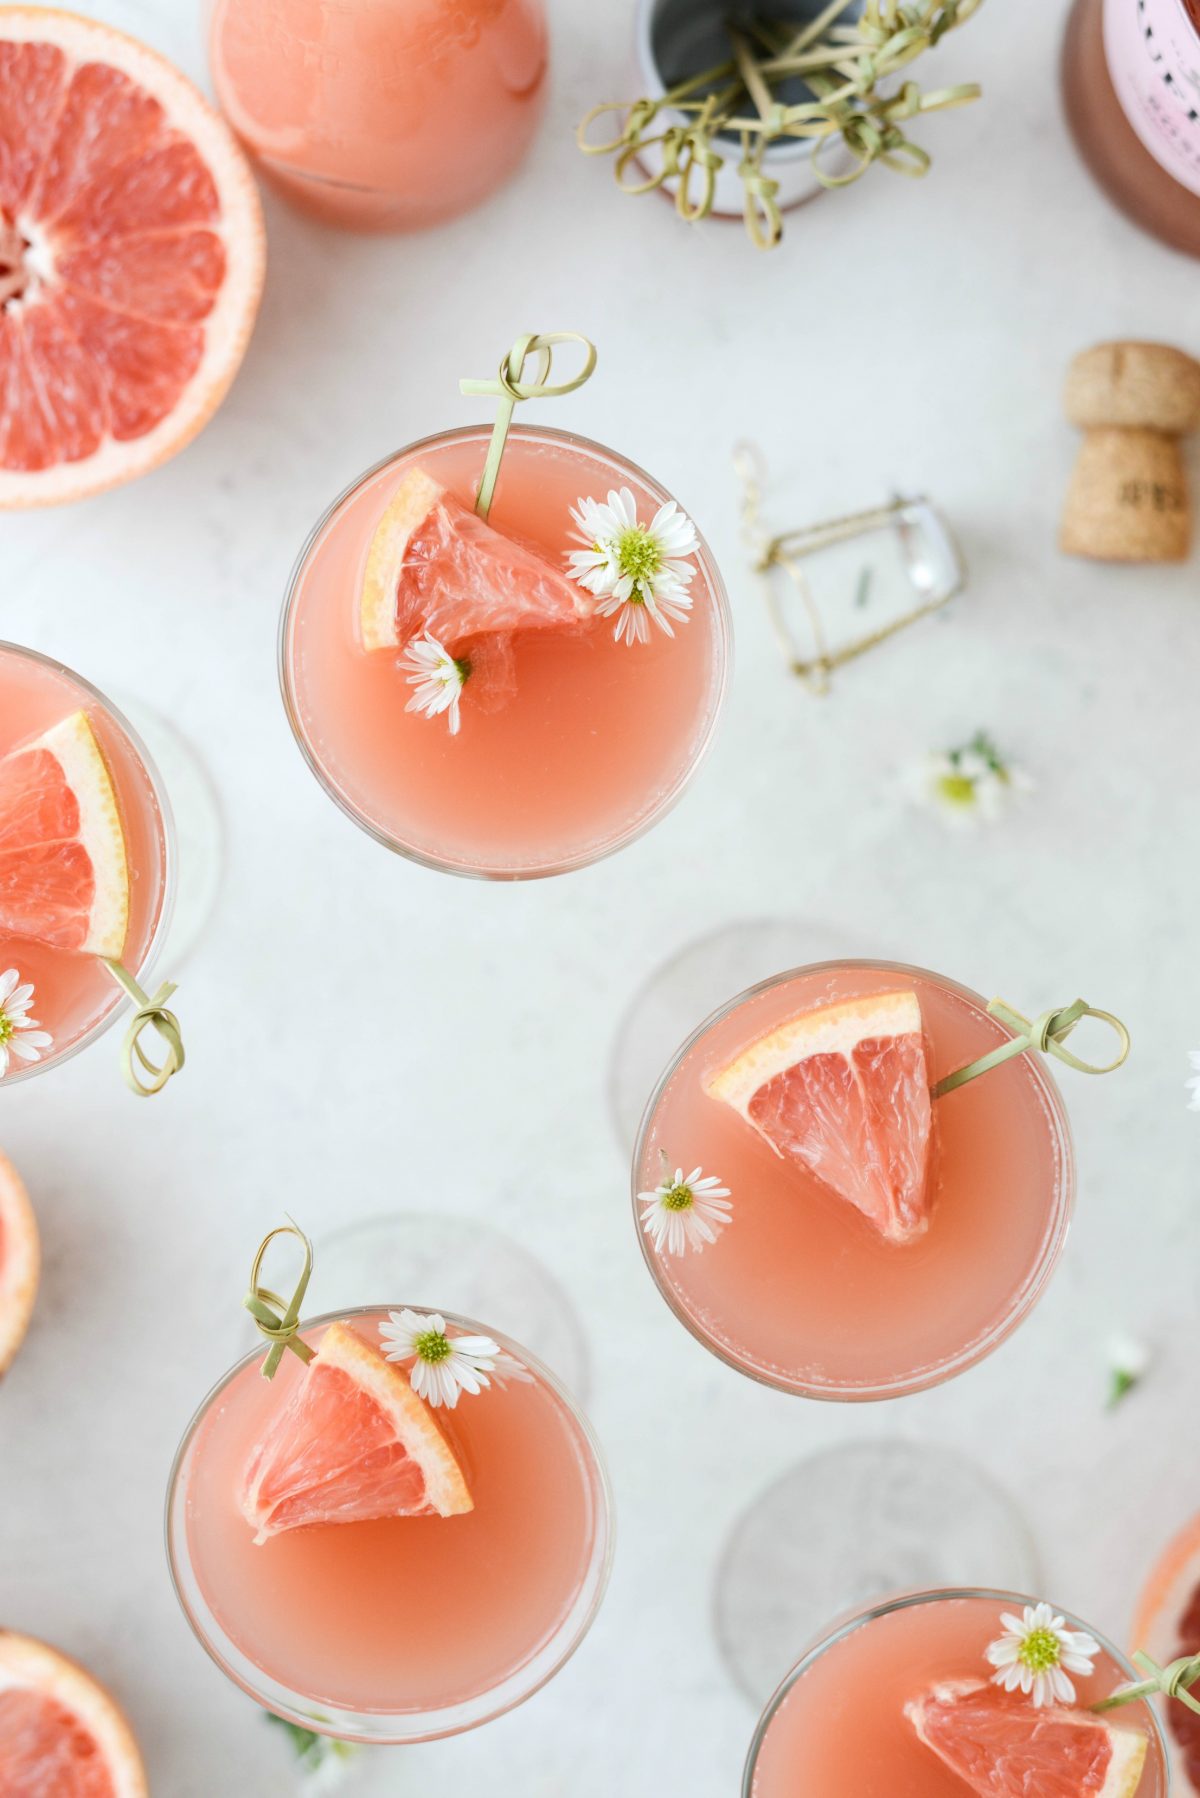 greippi Rosé Mimosas l SimplyScratch.com #adult #beverage #greippi #rose #mimosa #easter #brunch #mothersday